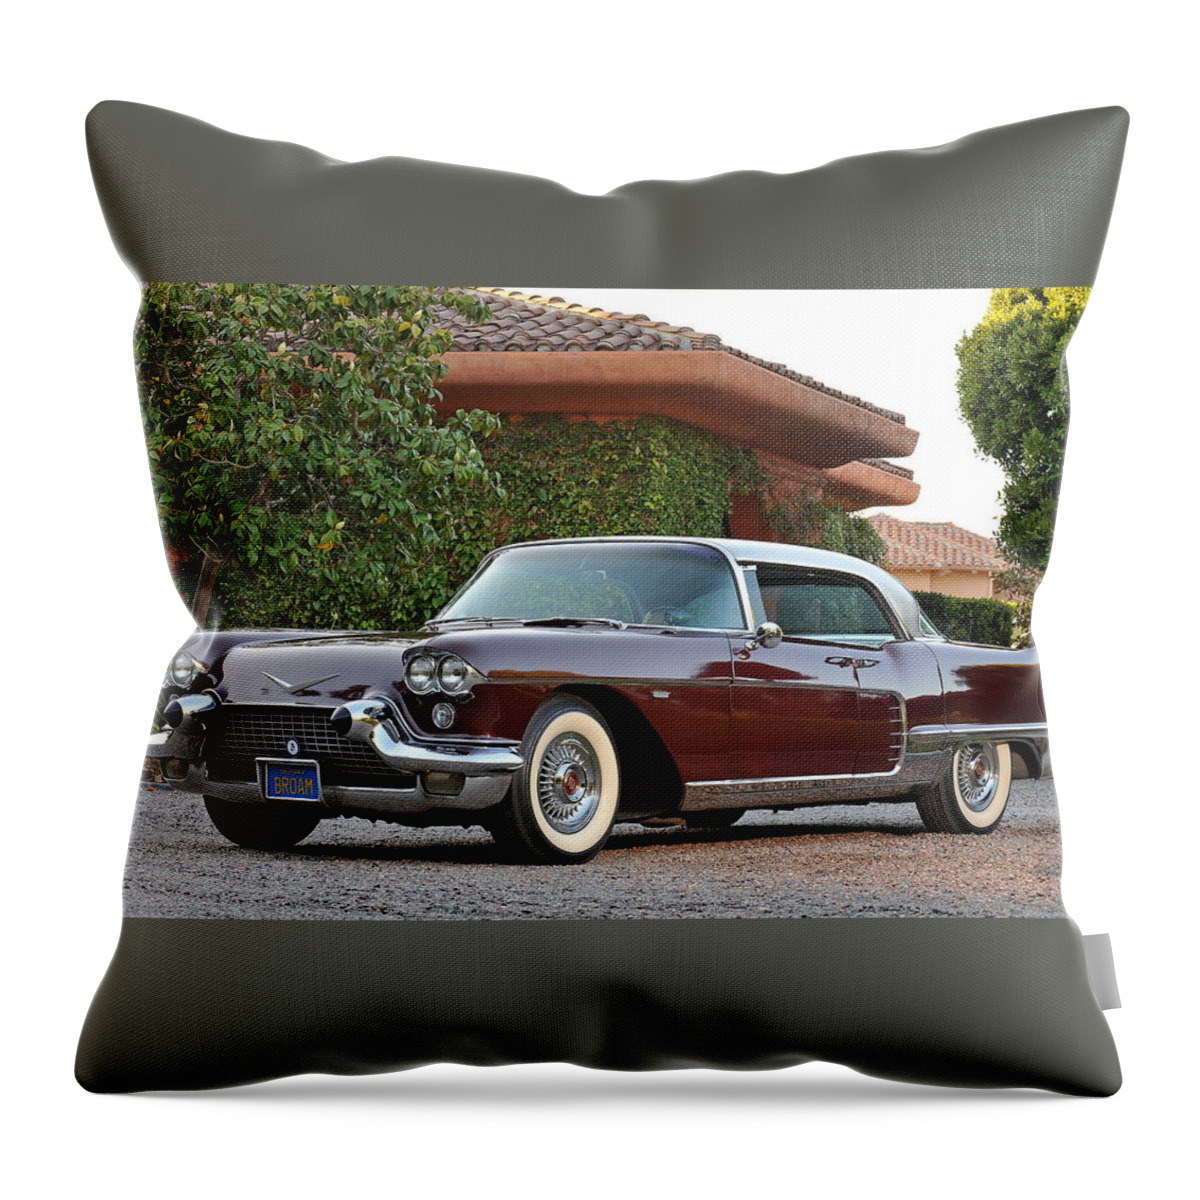 1958 Cadillac Eldorado Brougham Throw Pillow featuring the photograph 1958 Cadillac Eldorado Brougham by Mariel Mcmeeking